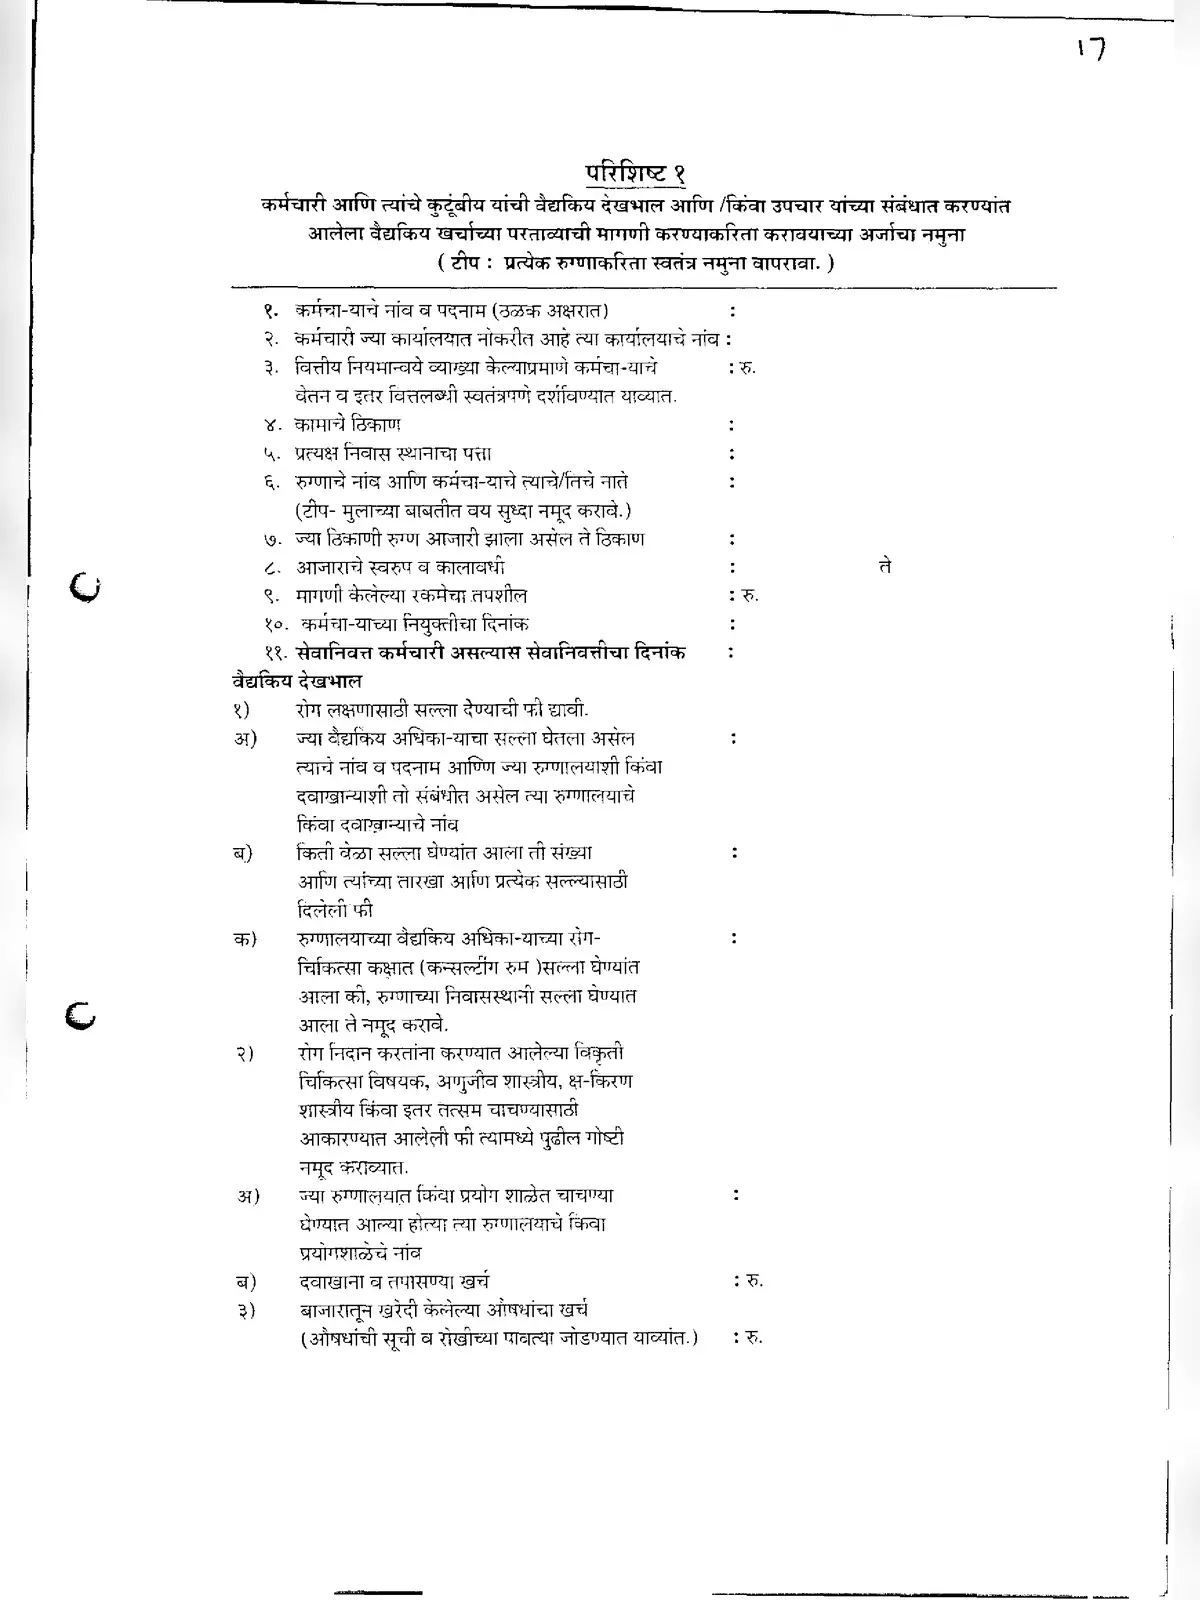 Medical Reimbursement Form for Maharashtra Government Employees